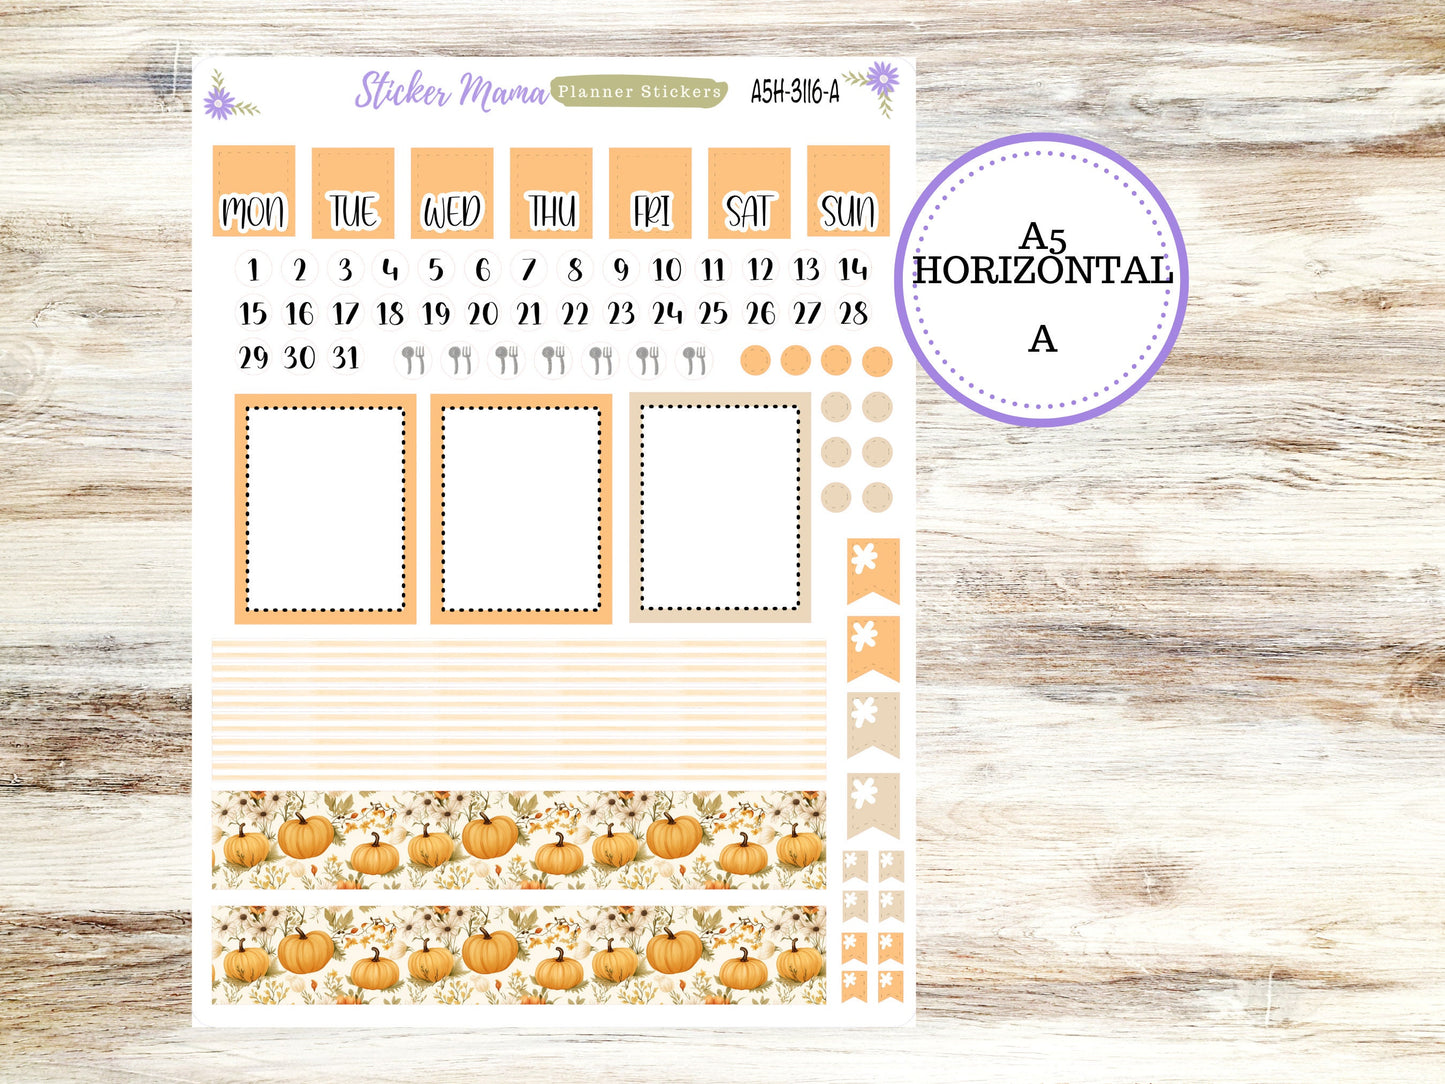 A5 Horizontal || #3116 ||  Pumpkin Spice  Kit || A5 Weekly Kit || Planner Stickers || Erin Condren A5 Horizontal Weekly Kit